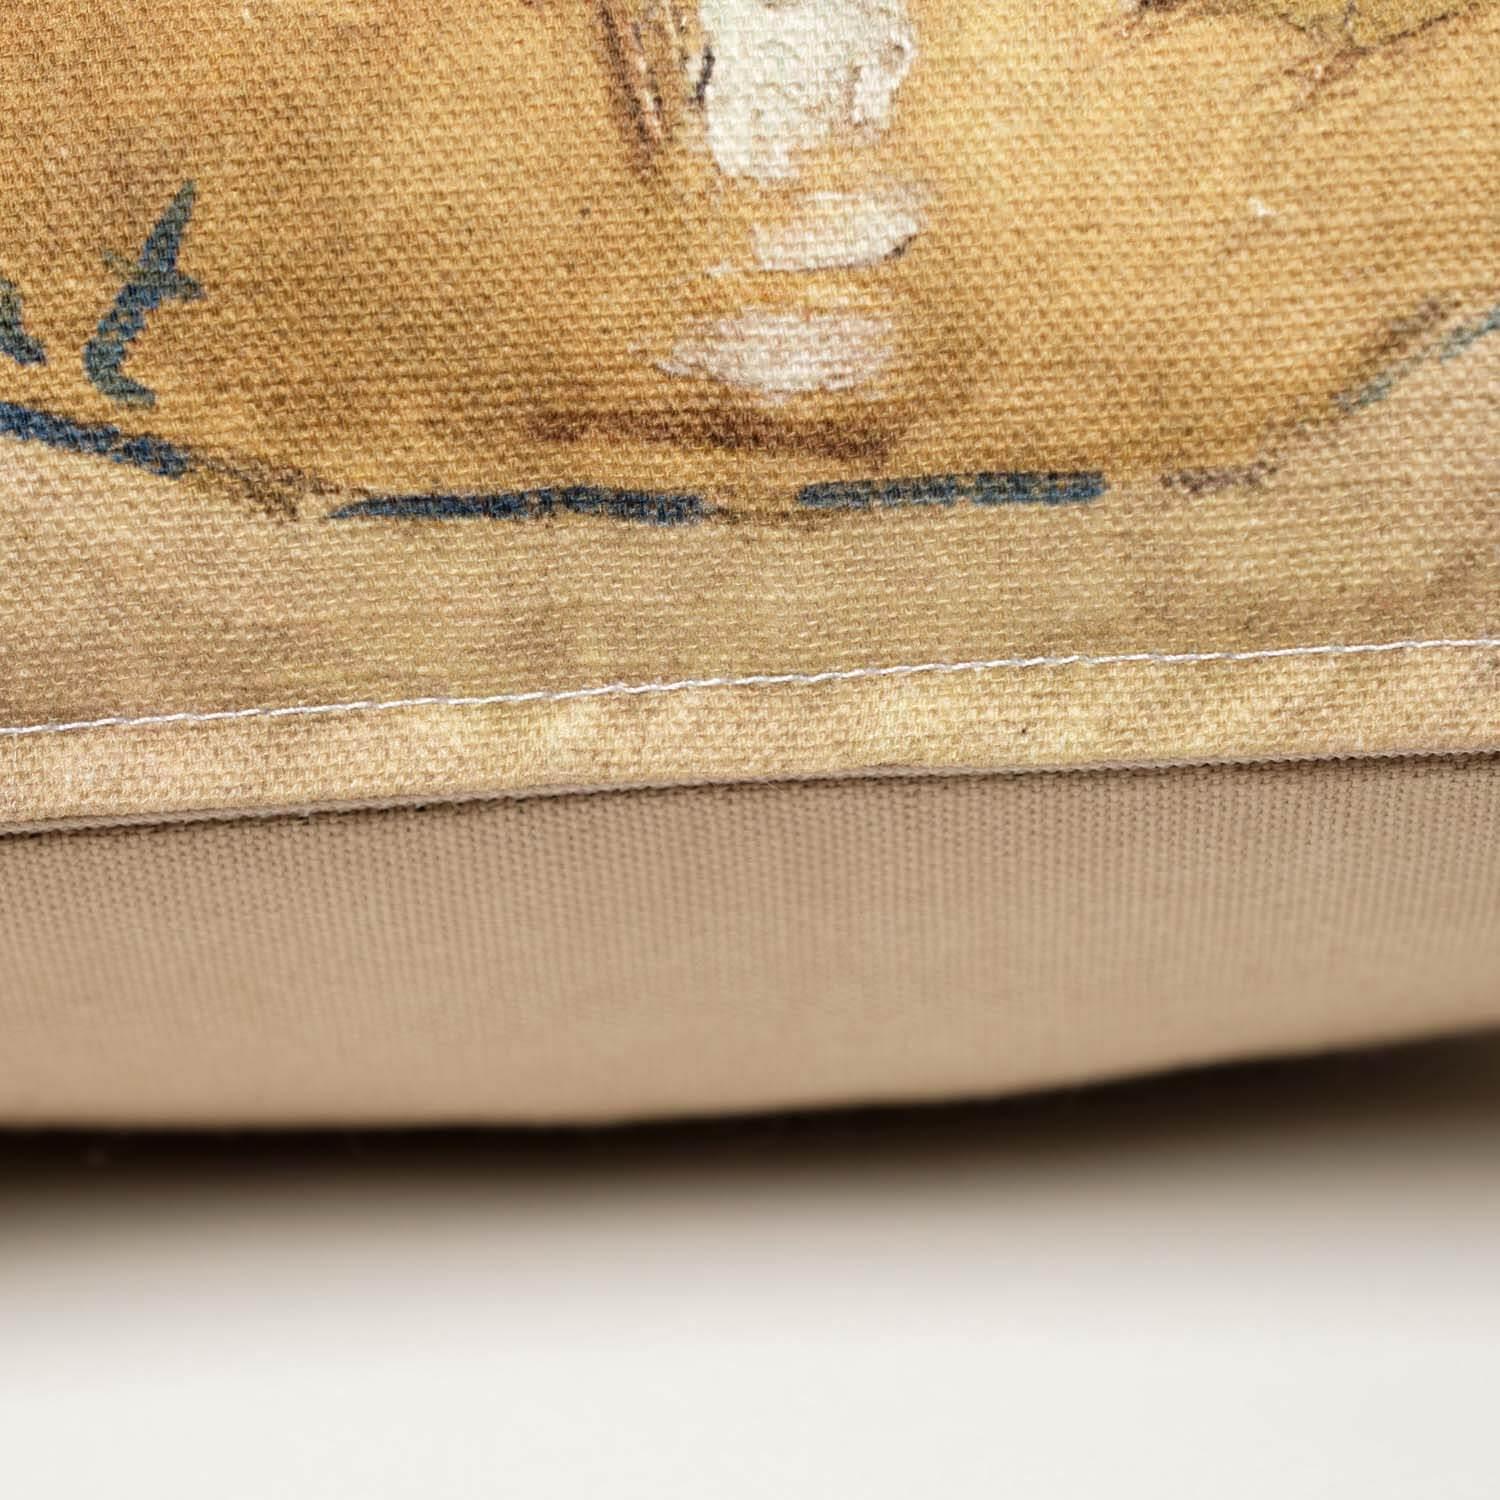 Hillside in Provence - Paul Cézanne - National Gallery Cushion - Handmade Cushions UK - WeLoveCushions